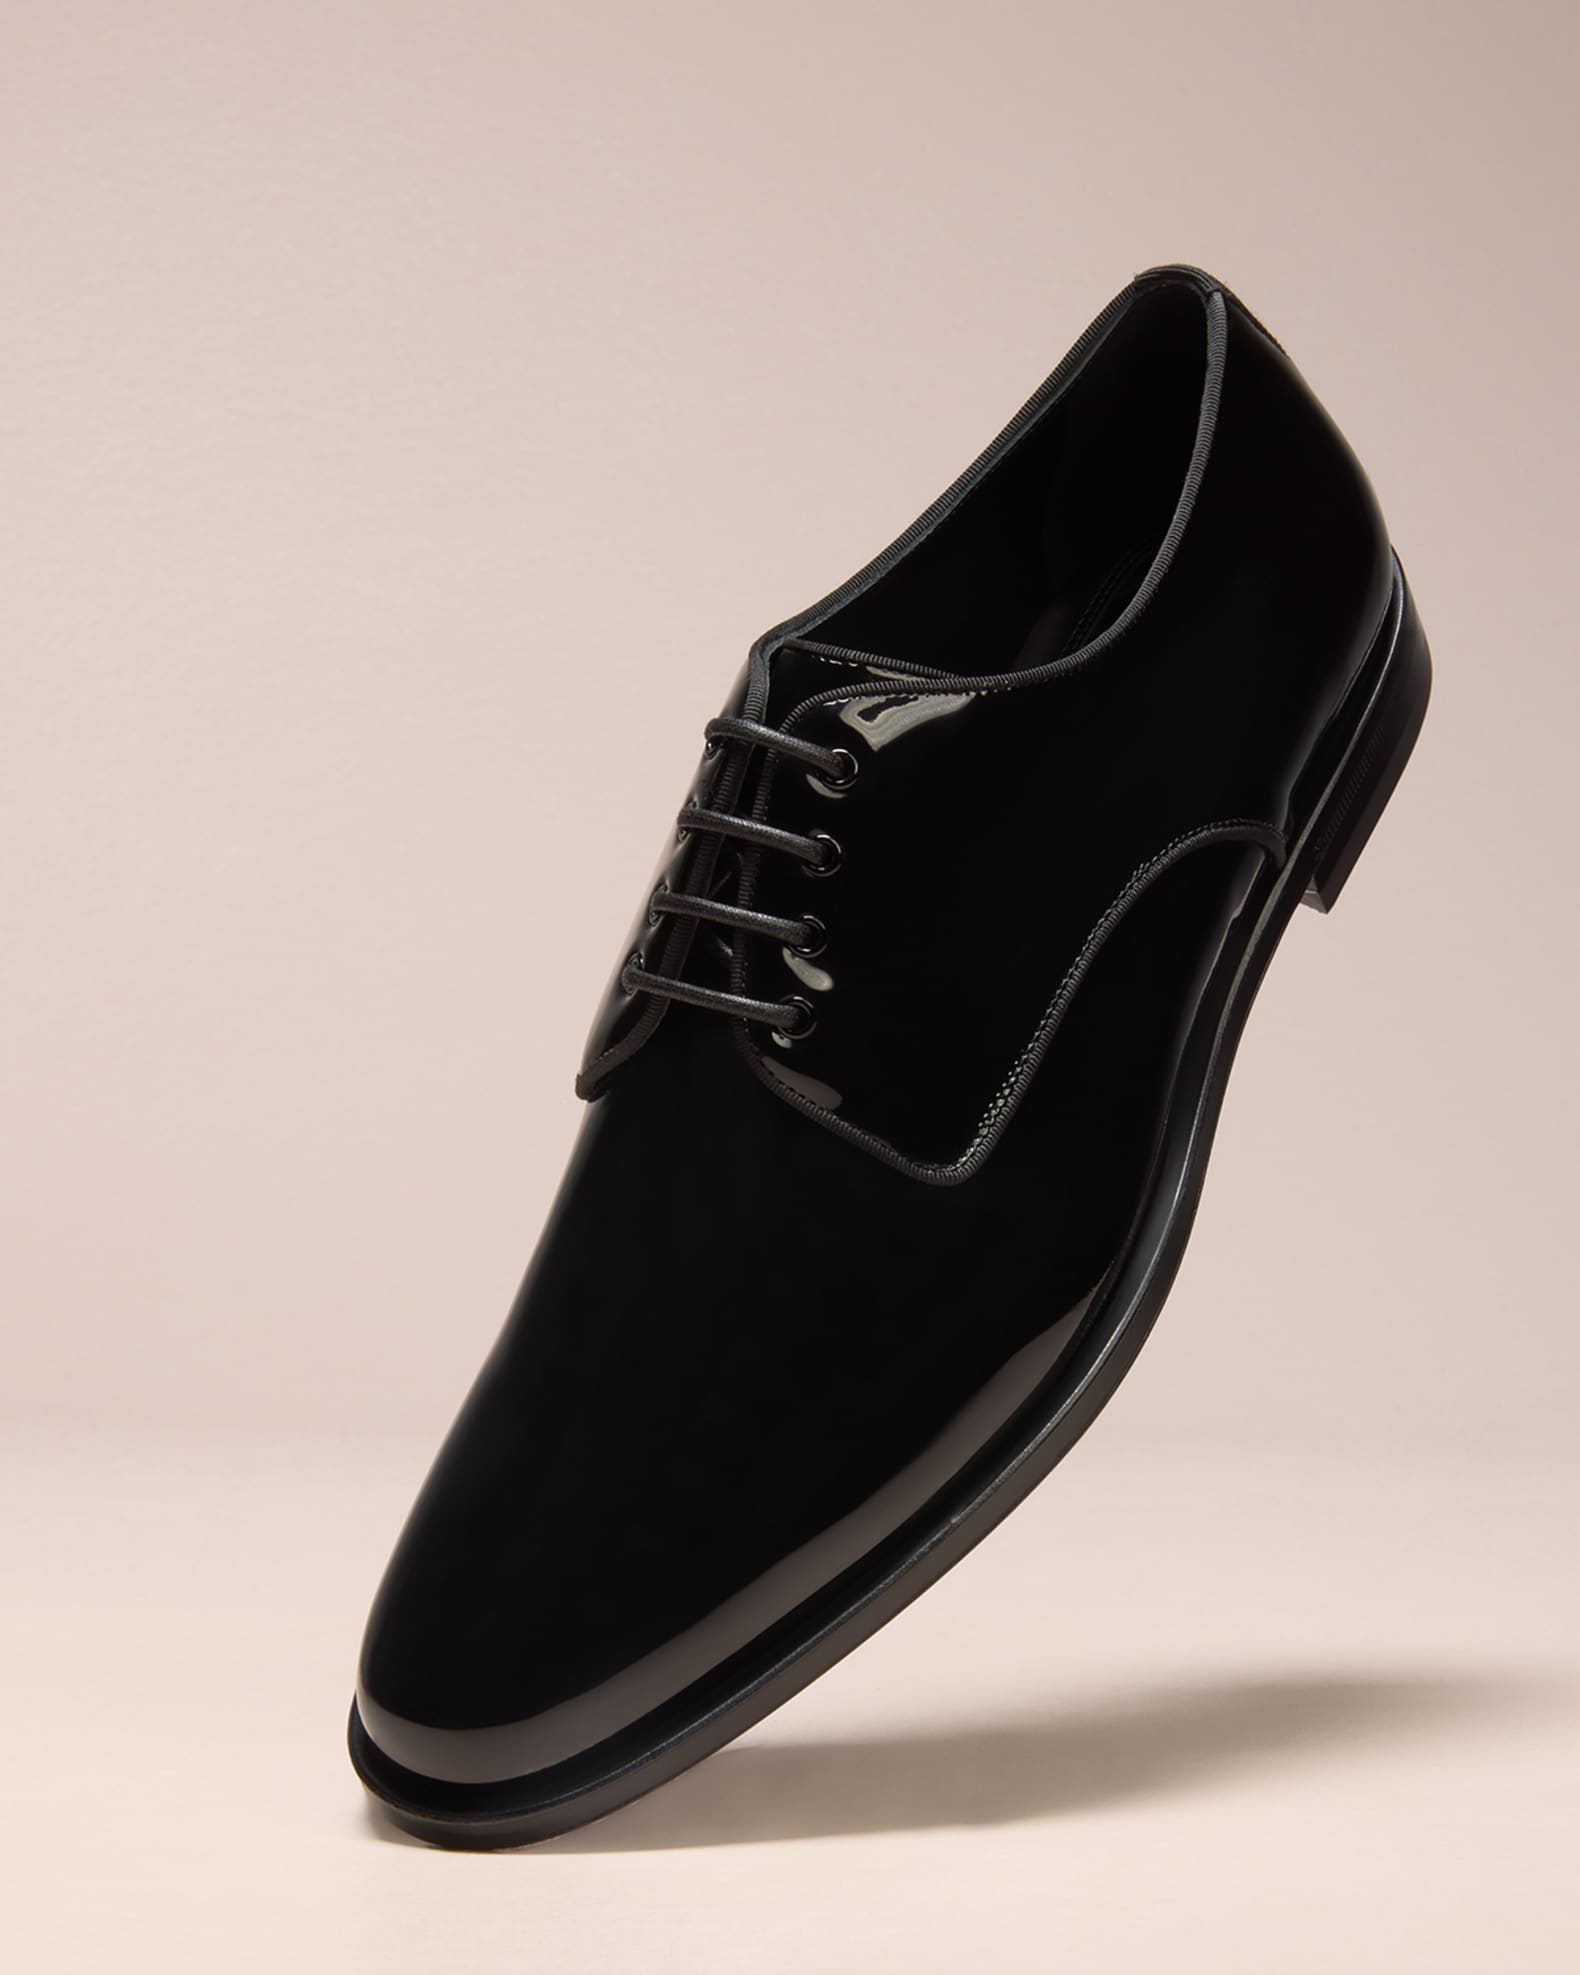 Dolce&Gabbana Men's Patent Leather Derby Shoes | Neiman Marcus